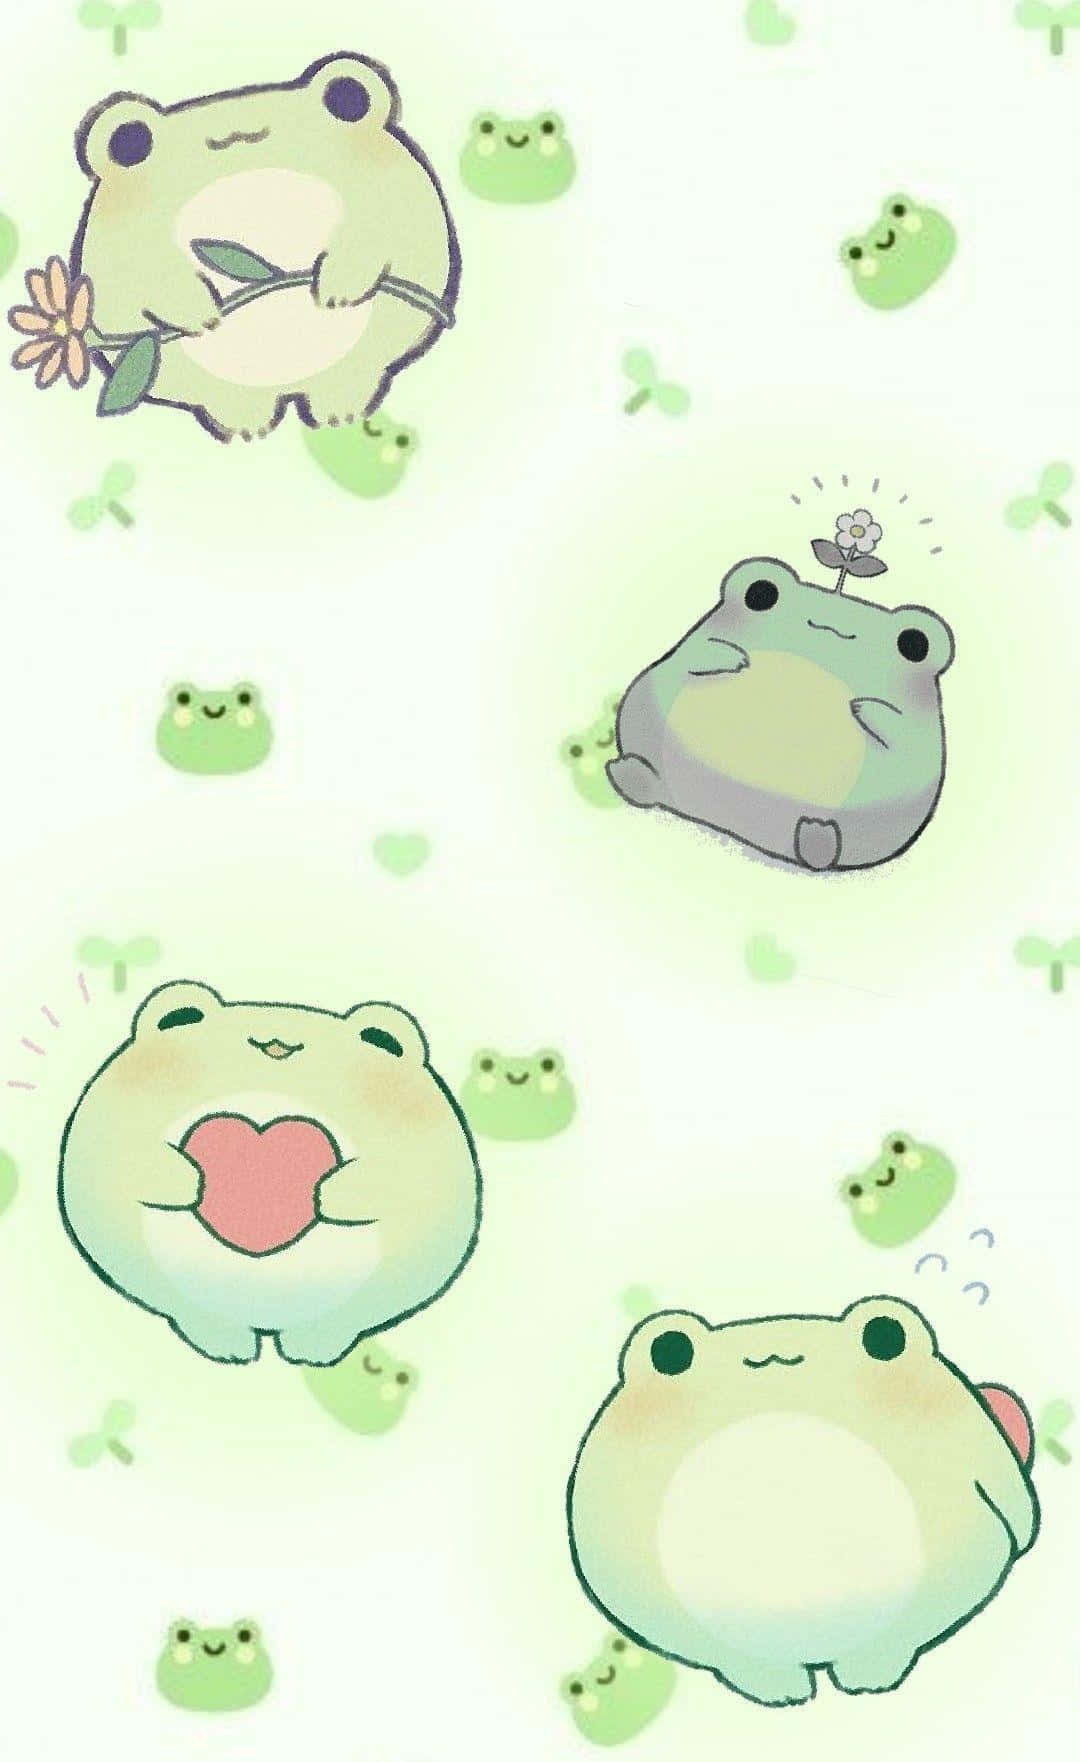 Adorable_ Frog_ Illustrations Wallpaper